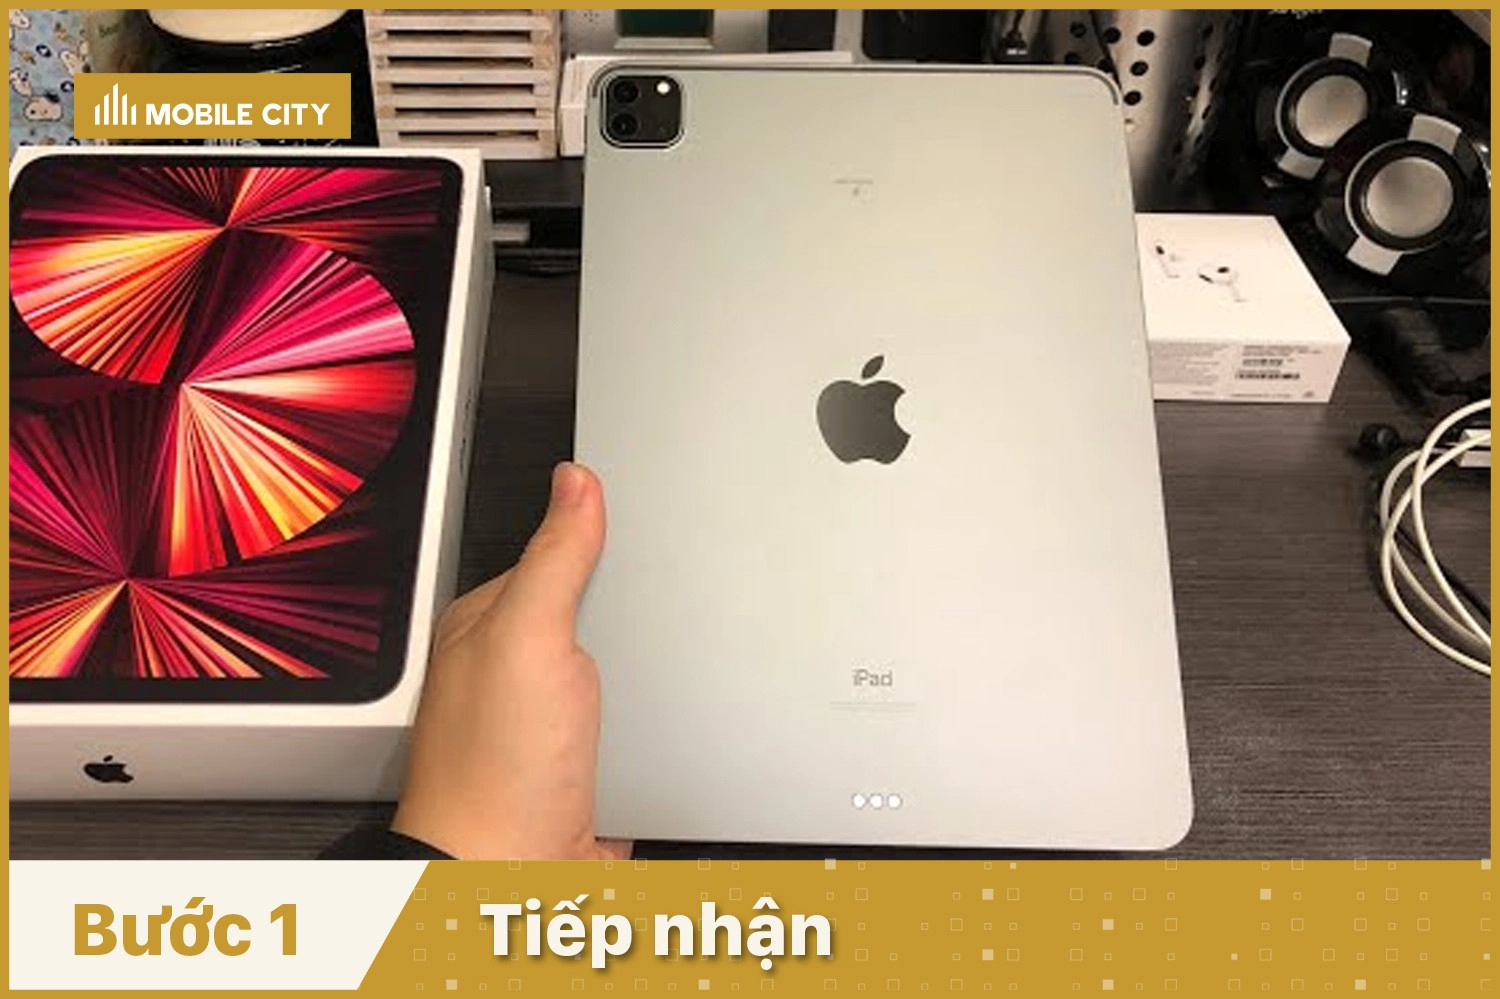 thay-pin-ipad-pro-m1-12-9-2021-tiep-nhan